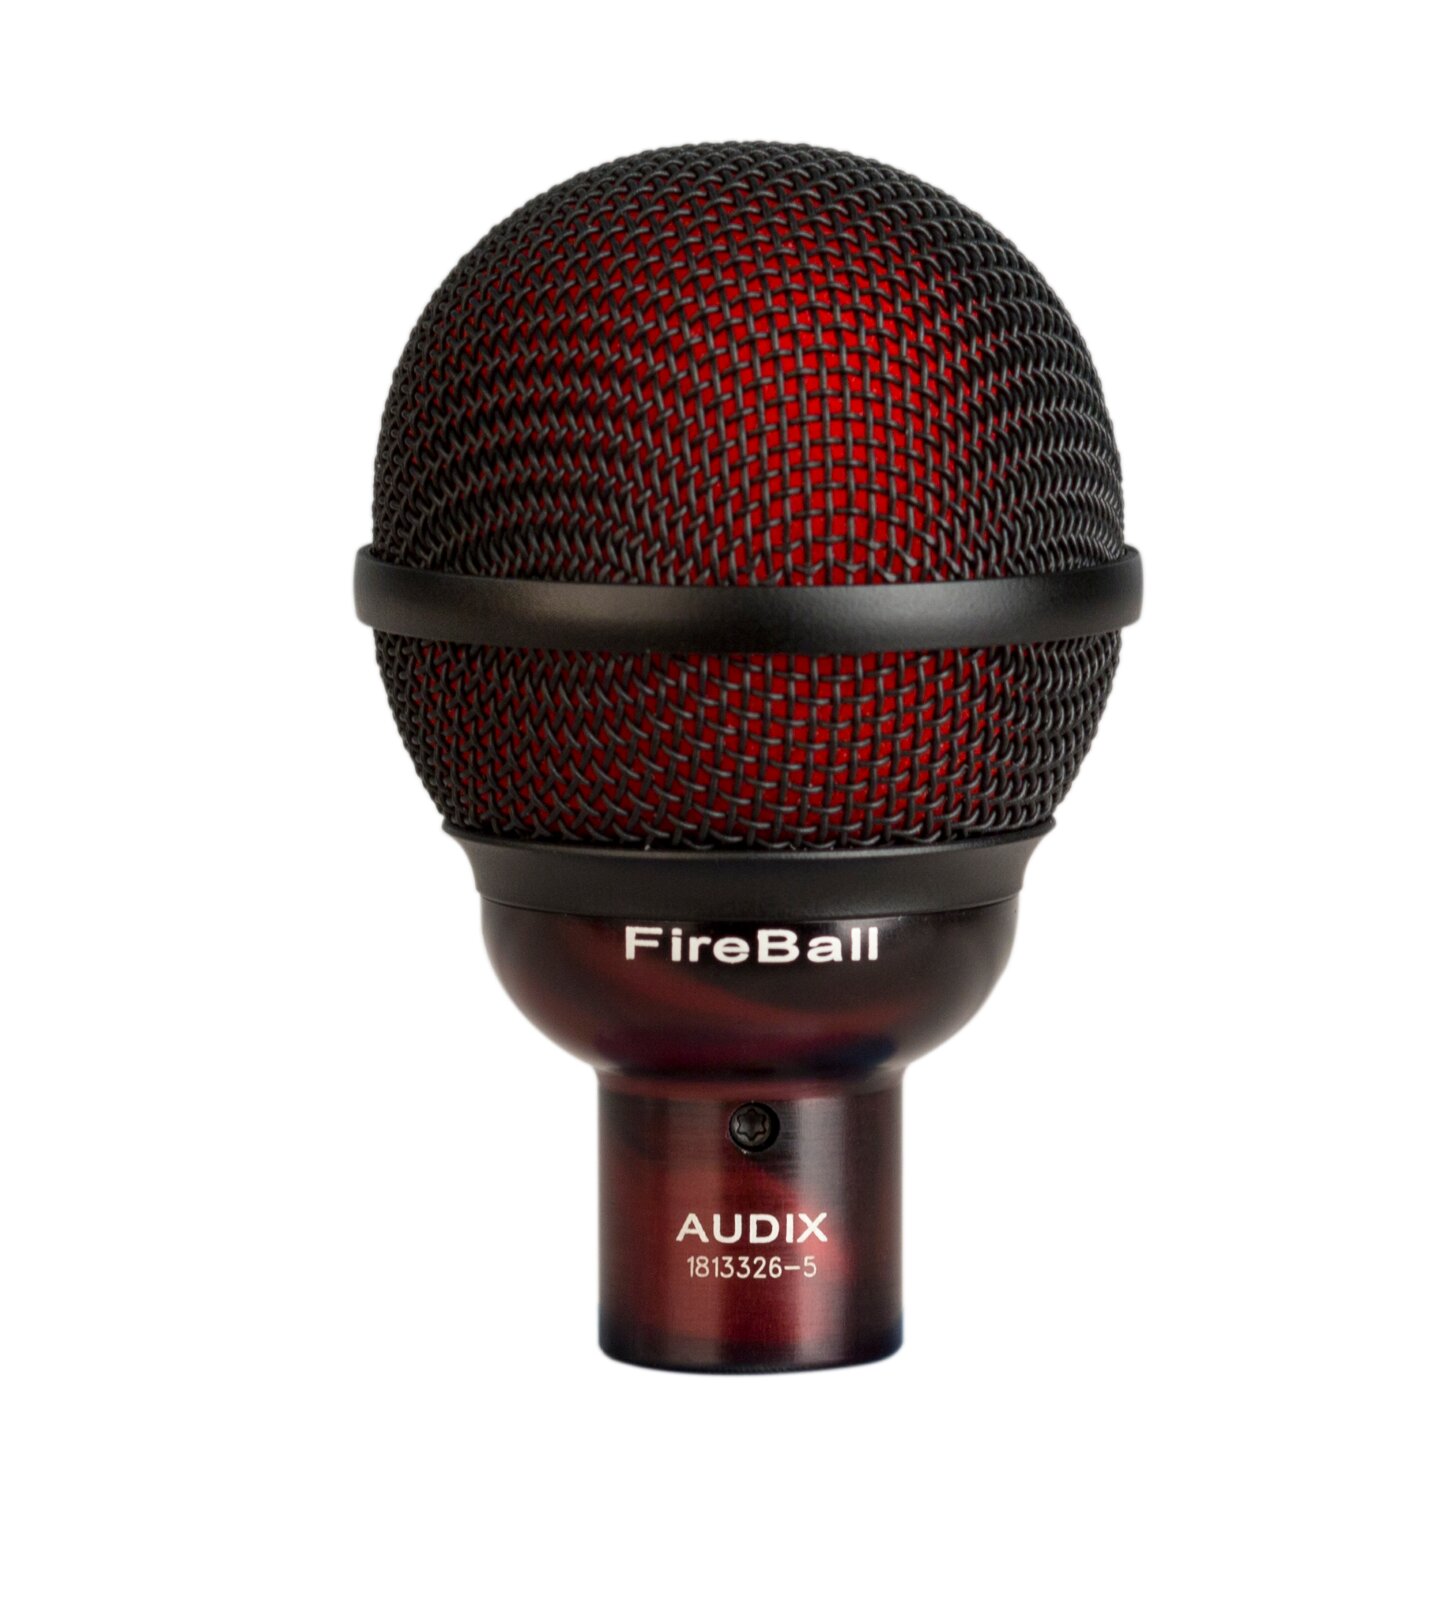 Audix FireBall Dynamic / Mundharmonika : photo 1